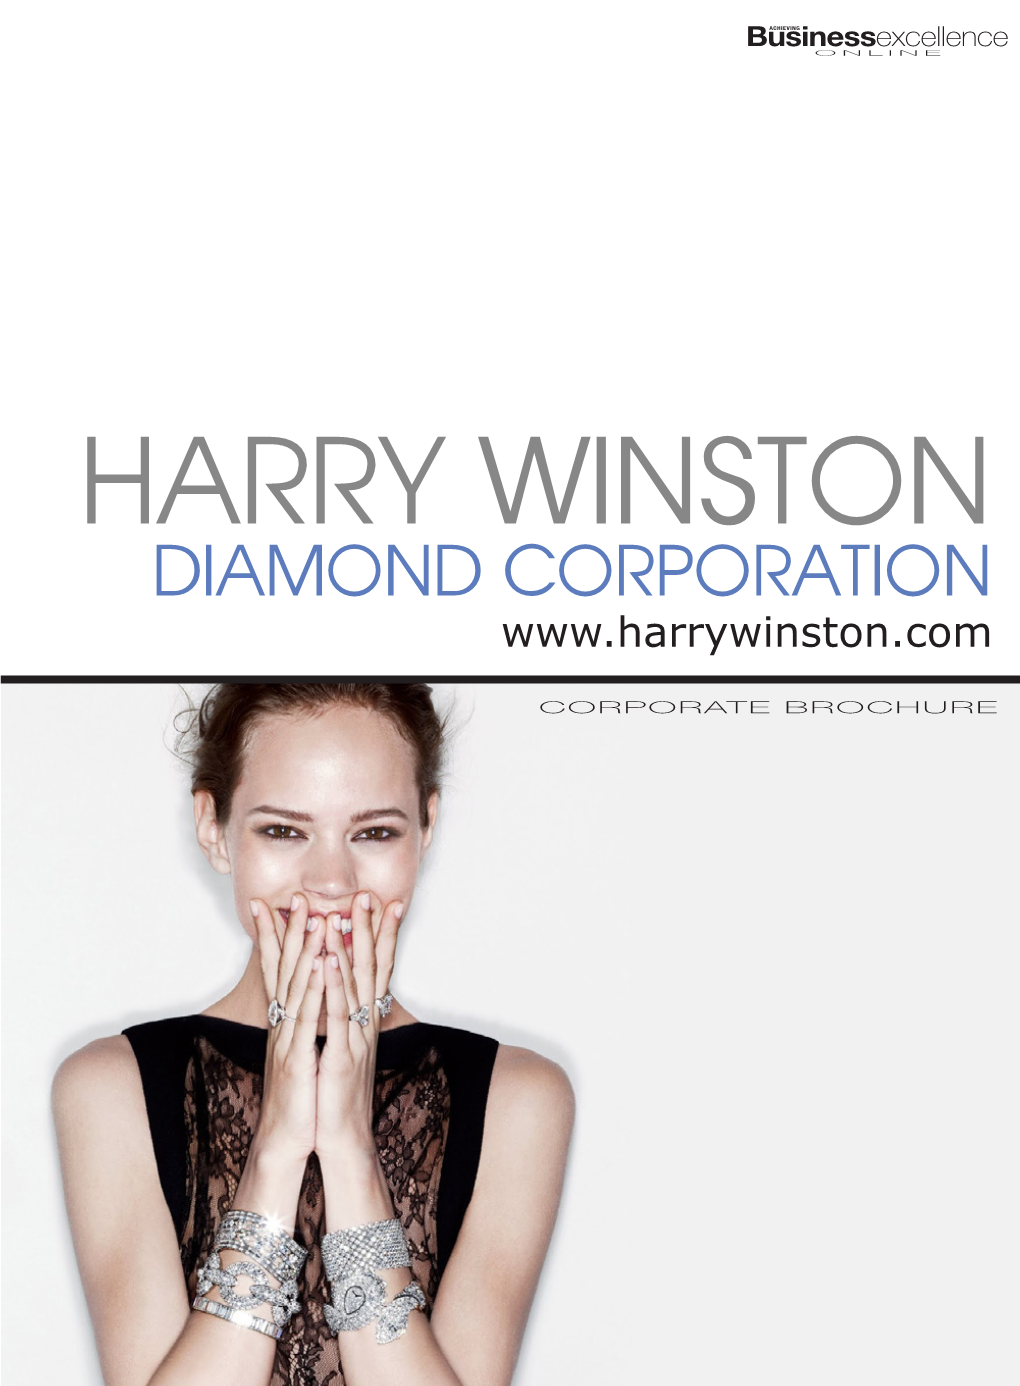 Harry Winston Diamond Corporation